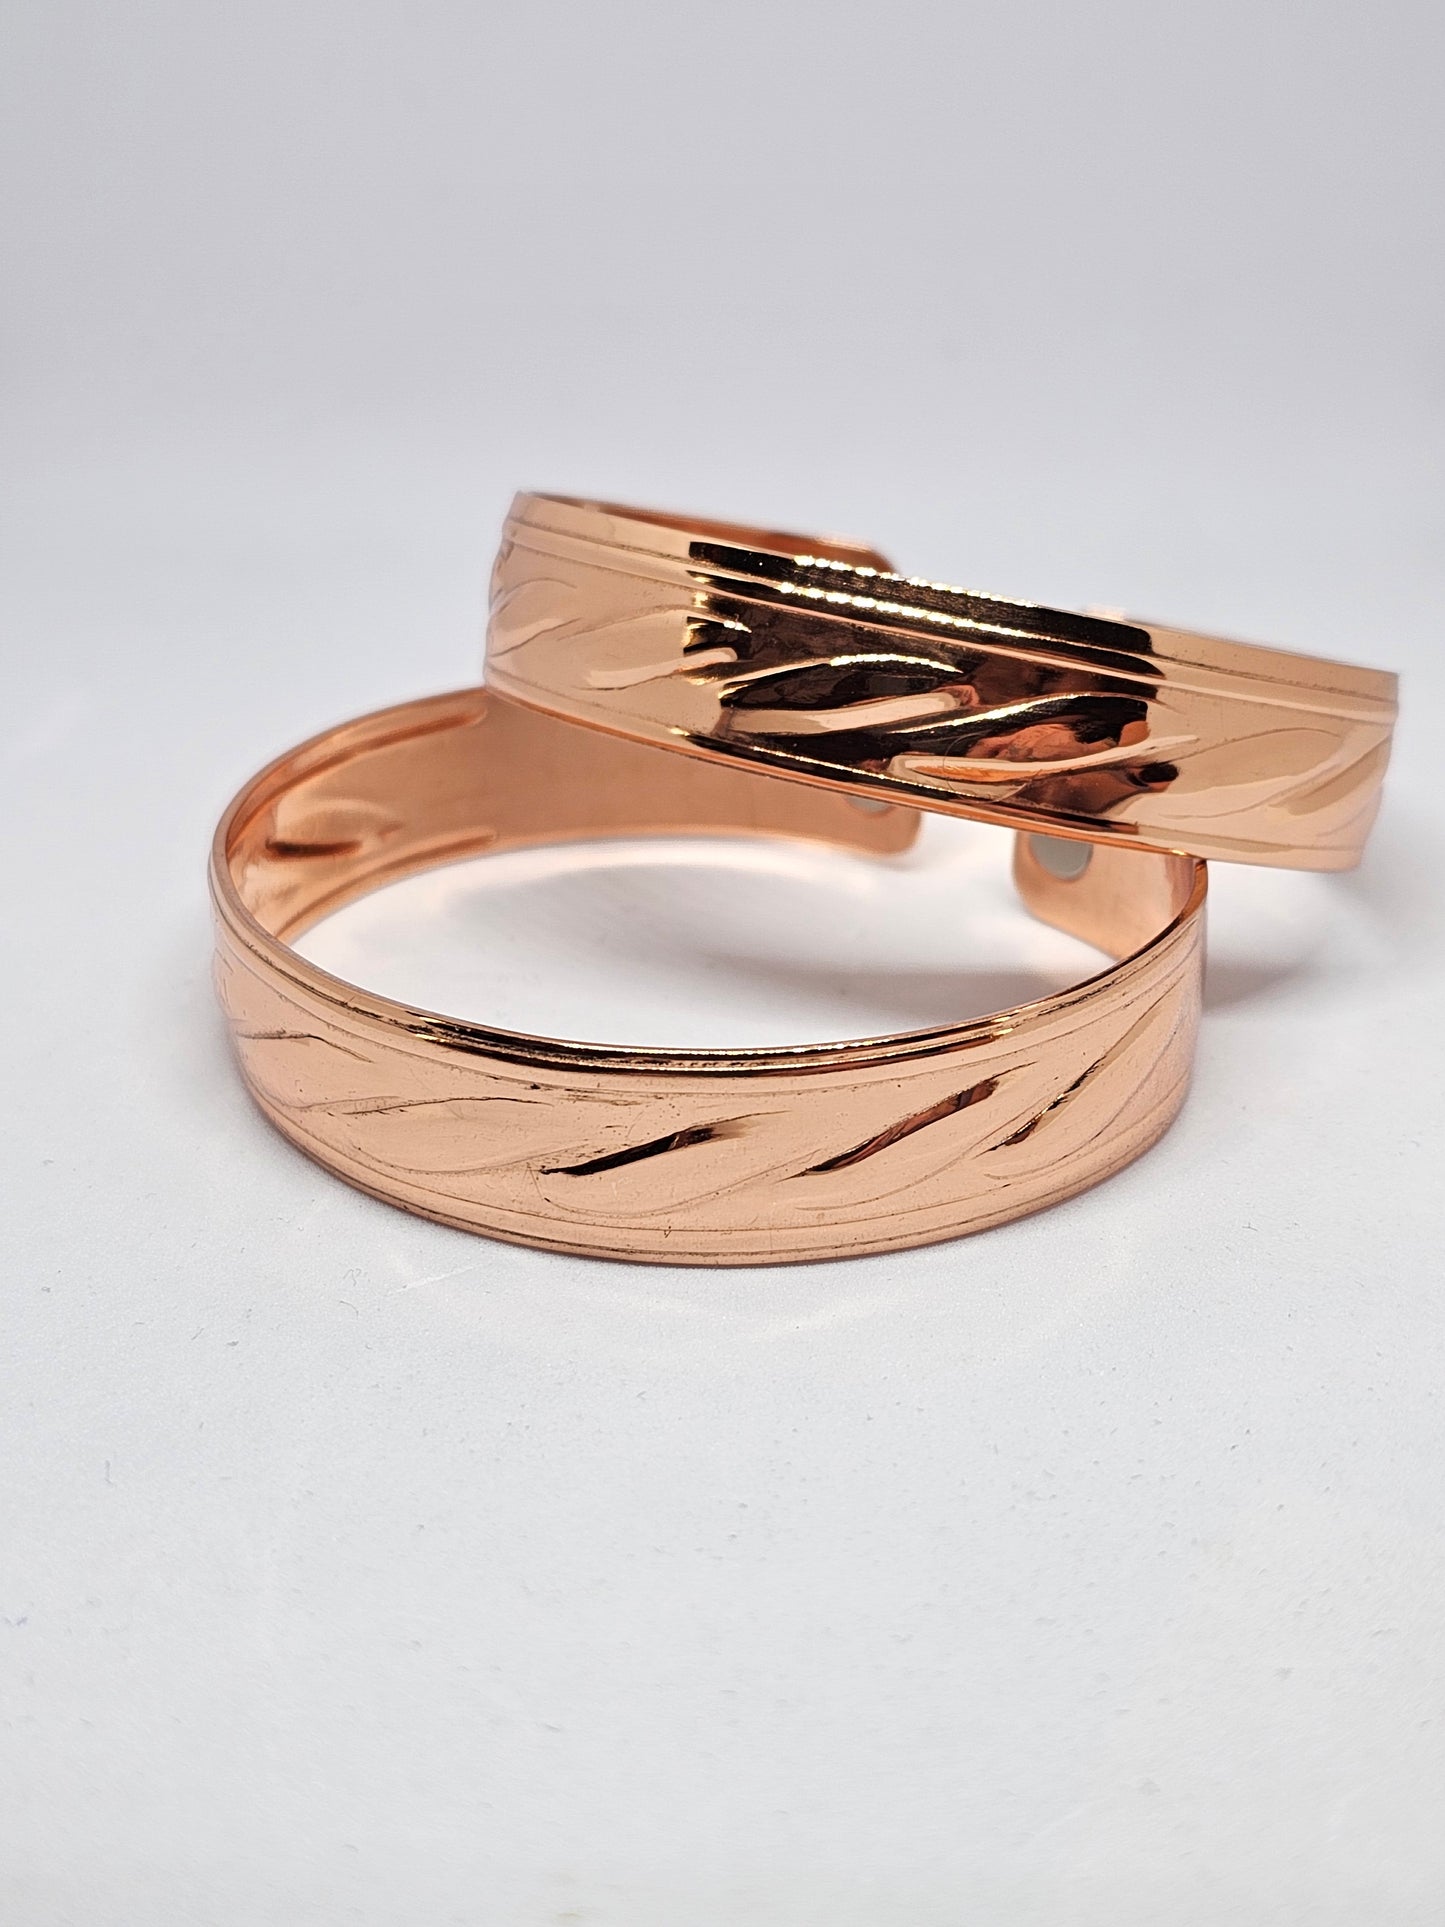 Handmade NZ Pure Copper Bracelet - Rivendell Shop